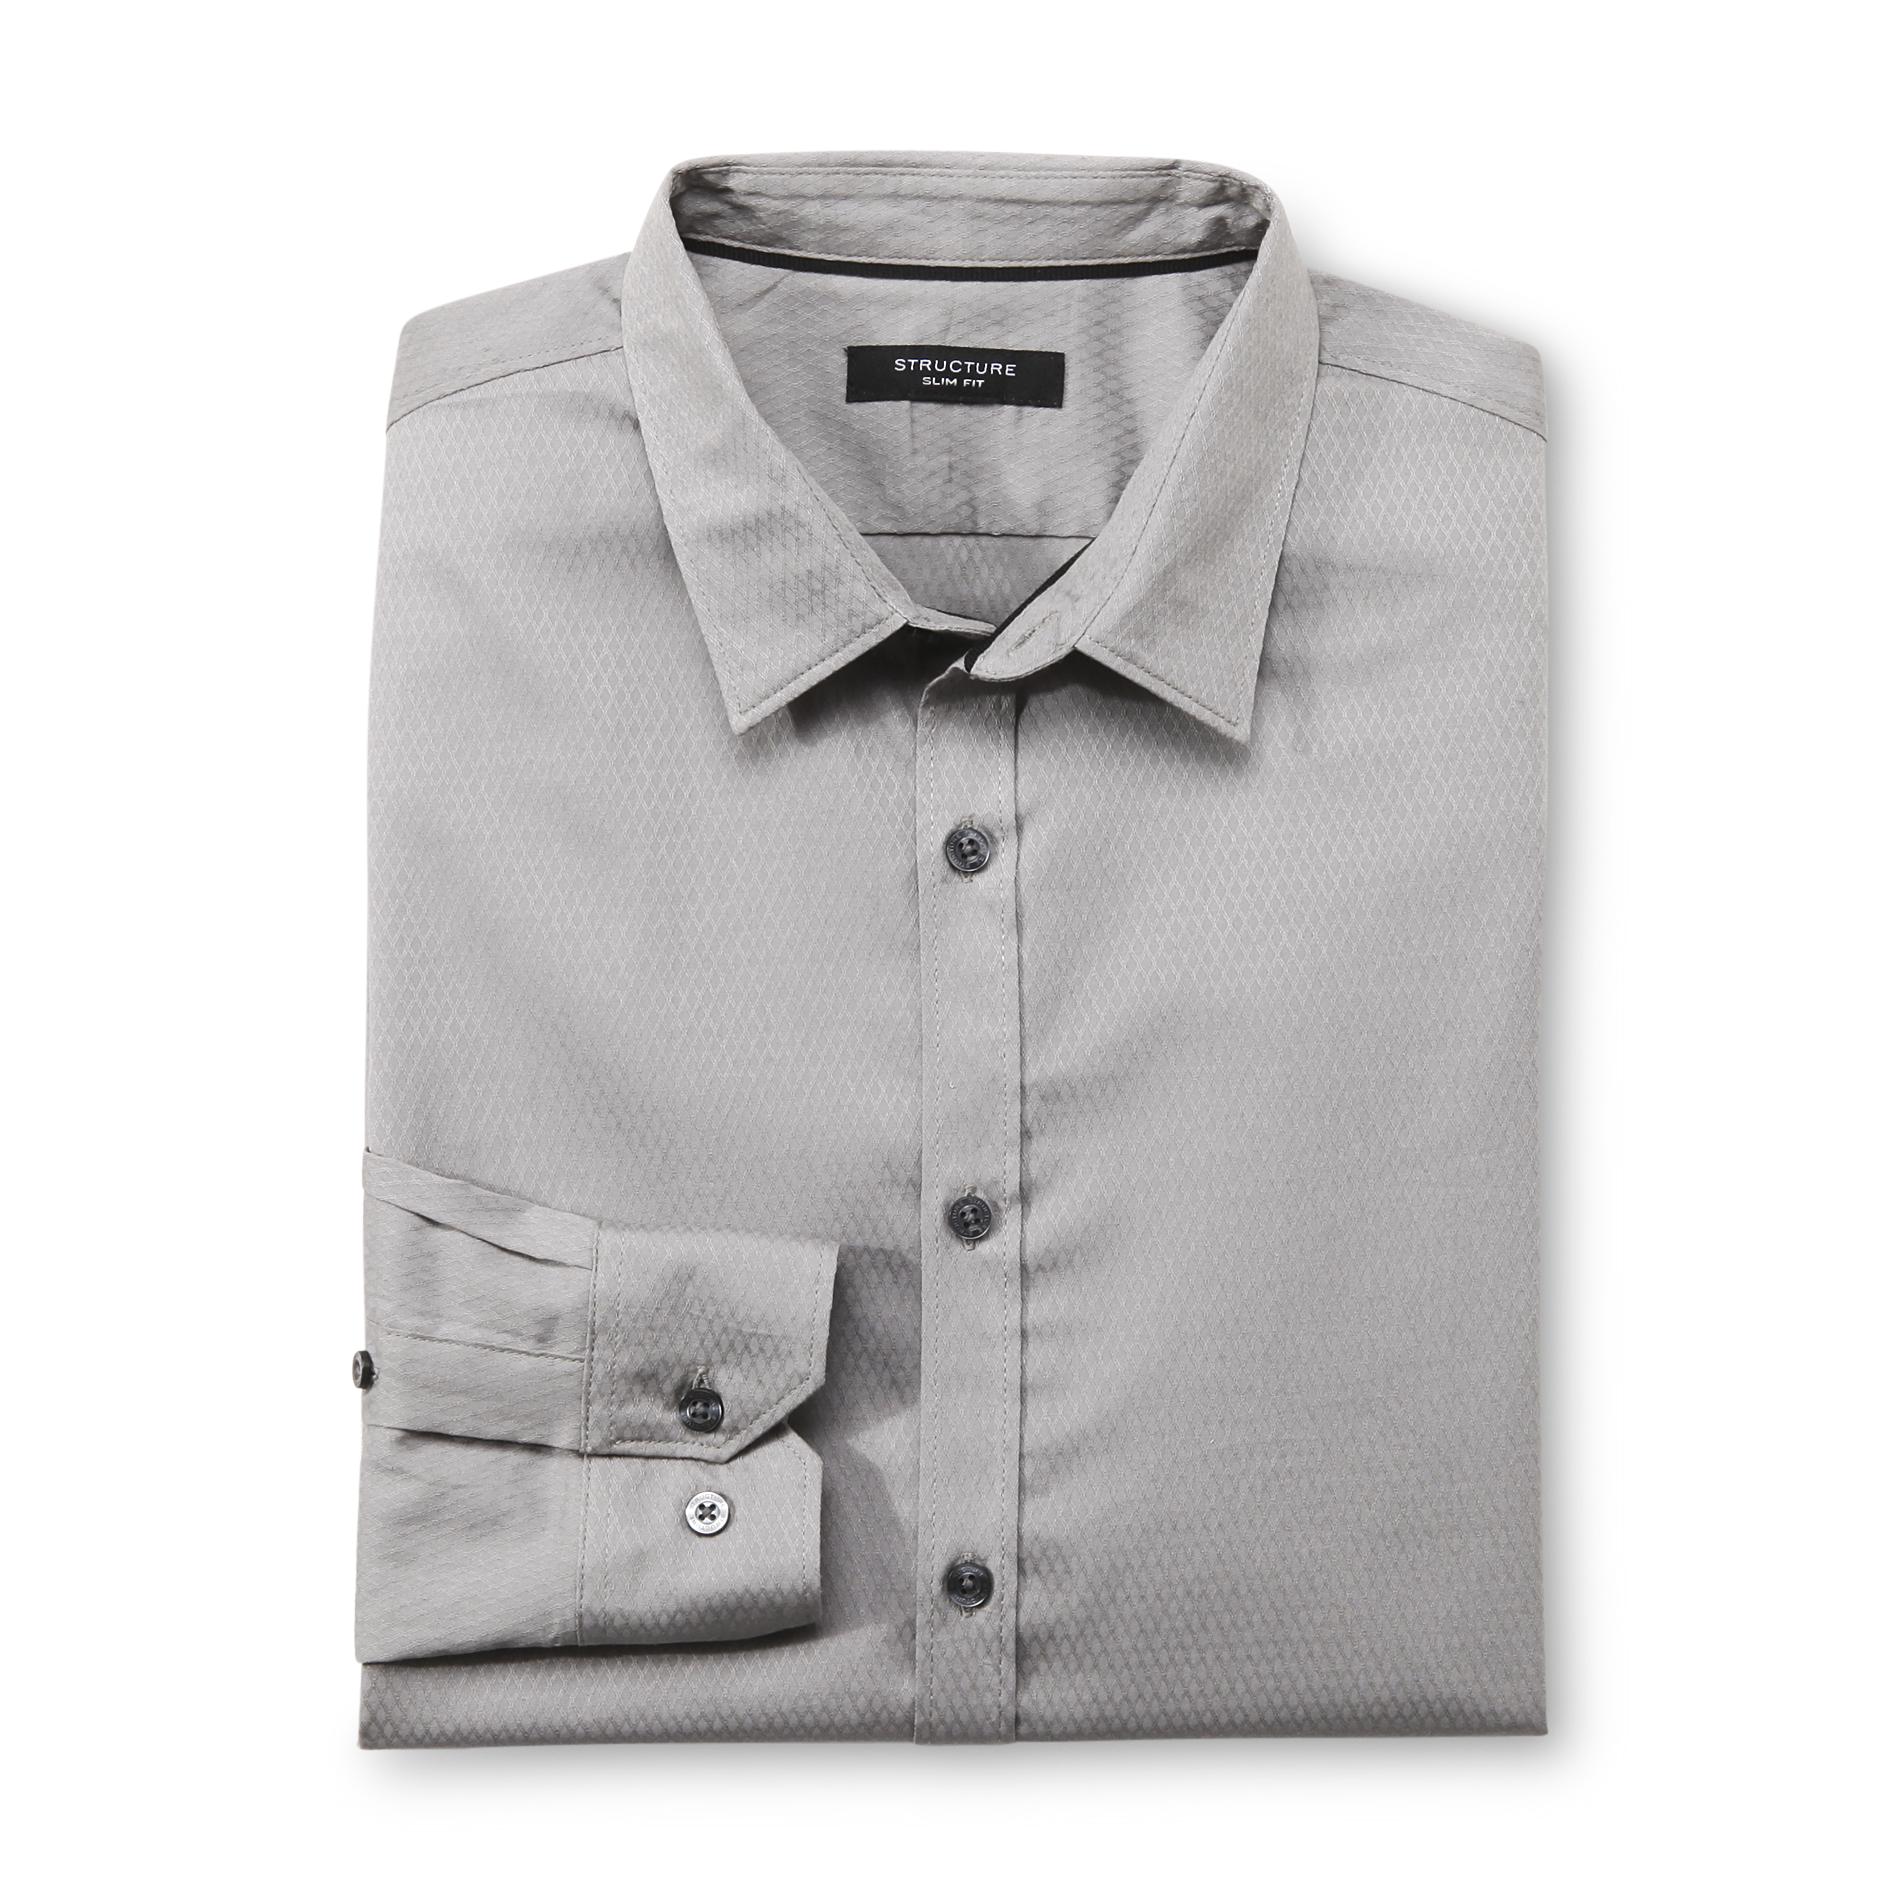 Structure Men's Slim Fit Dress Shirt - Diamond Pattern